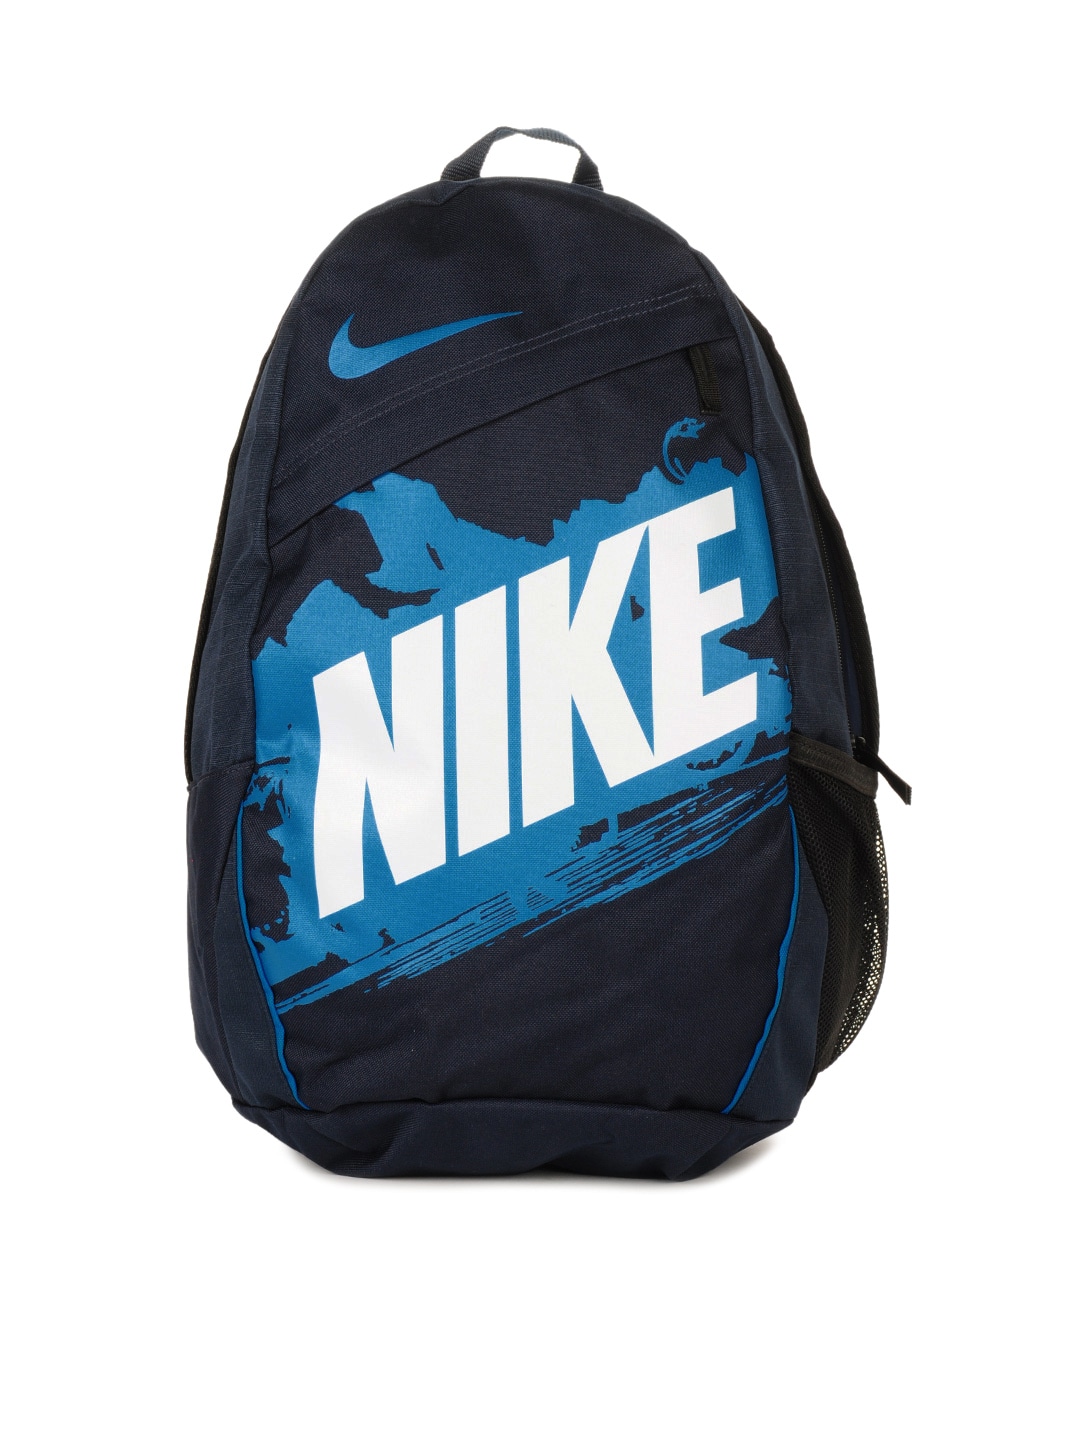 Nike Unisex Classic Turf Navy Blue Backpack